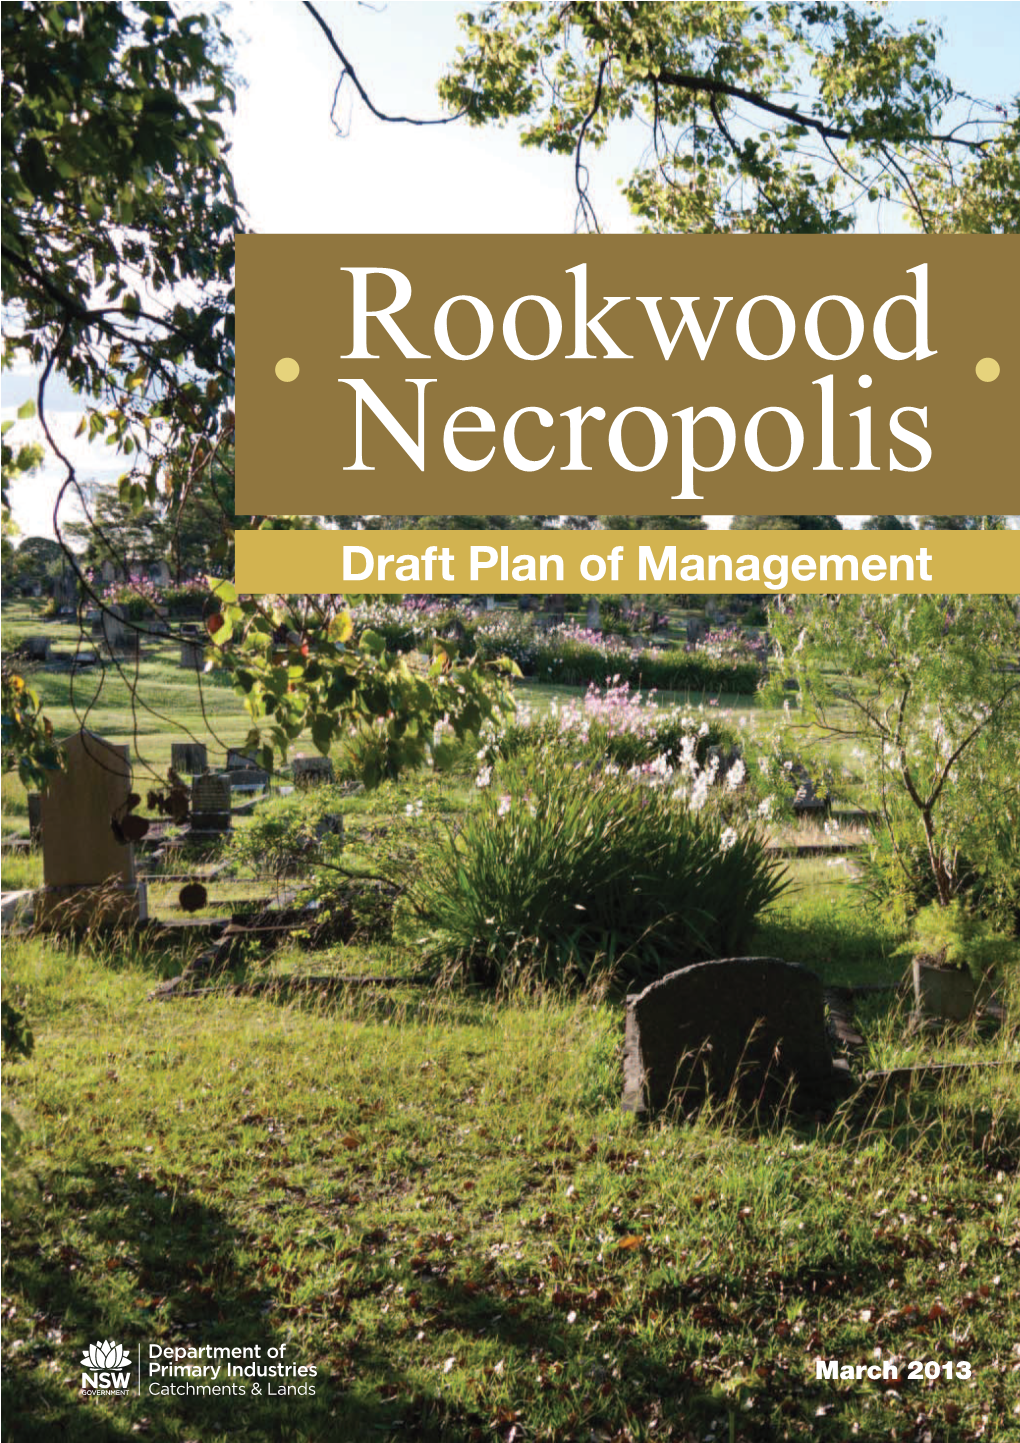 Rookwood Necropolis – Draft Plan of Management